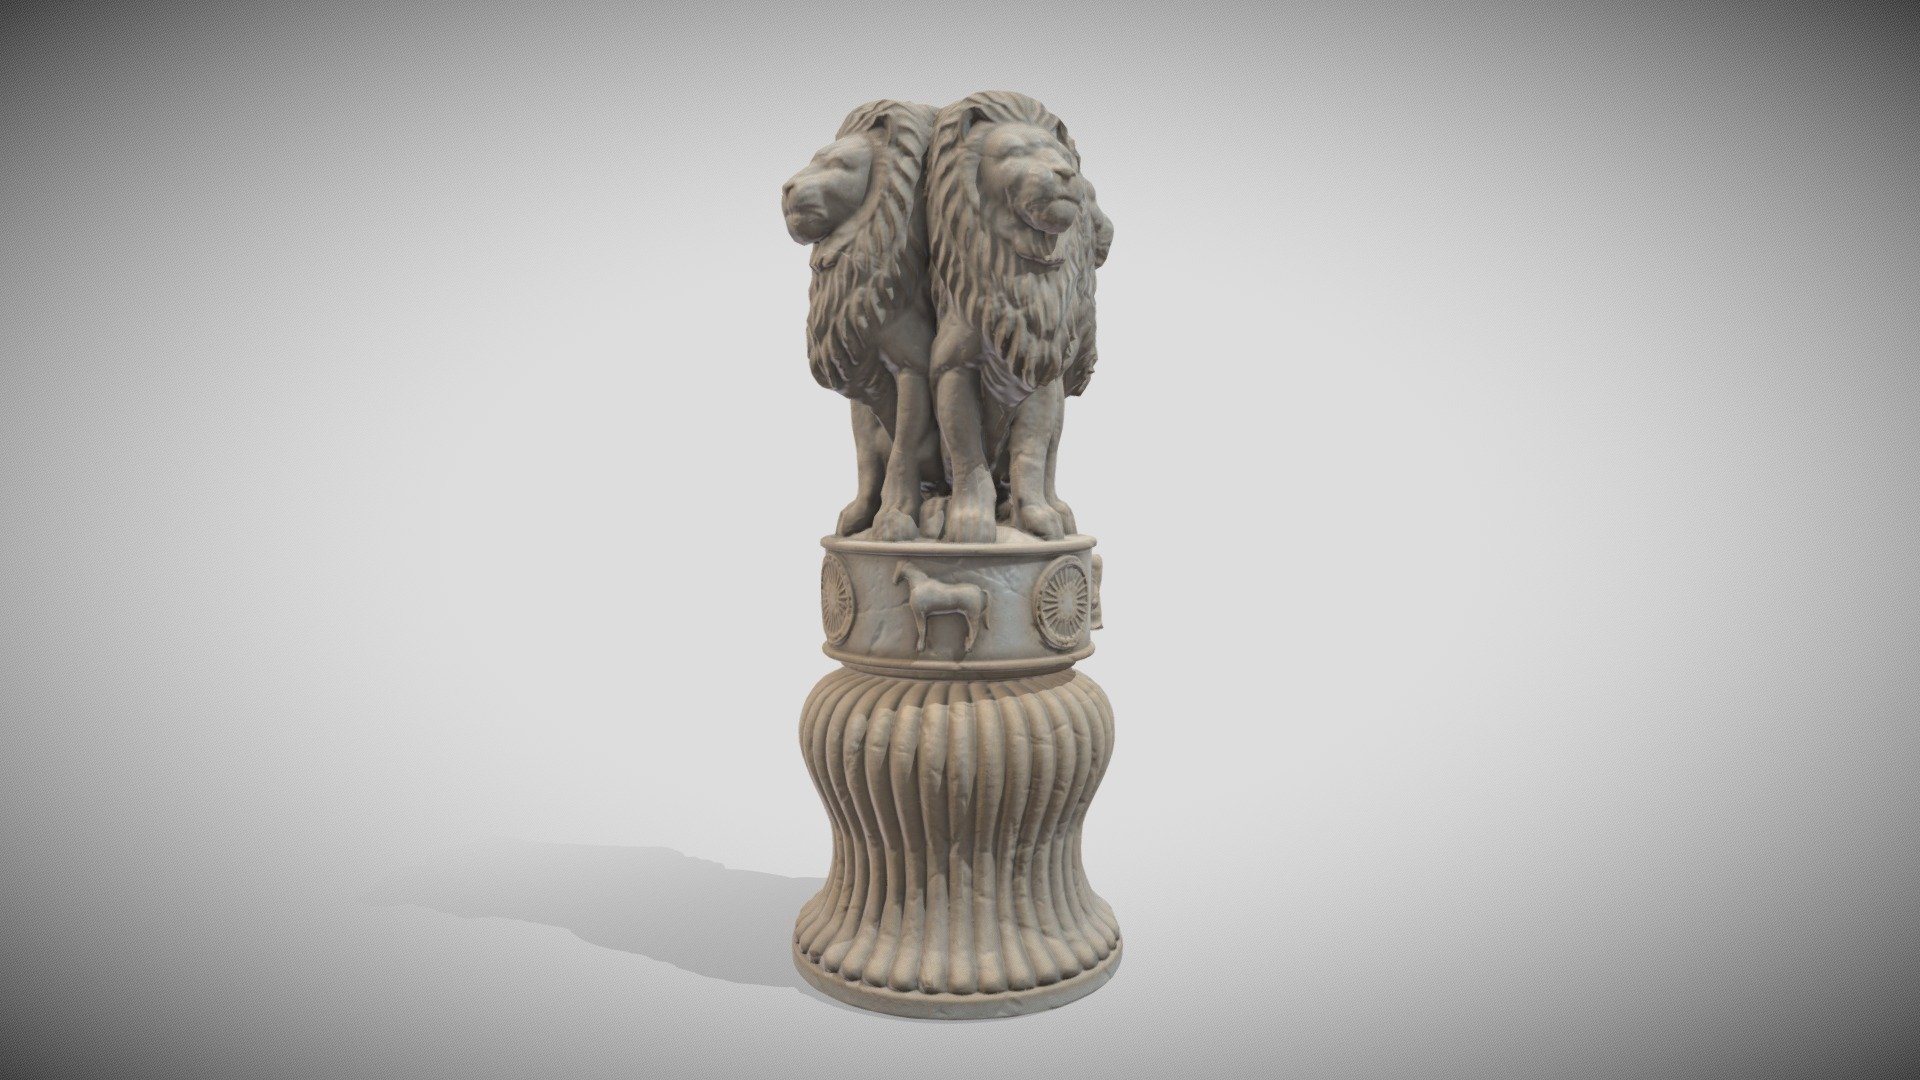 One Material PBR Metalness 4k - Ashoka Lions - Version Two - Buy Royalty Free 3D model by Francesco Coldesina (@topfrank2013) 3d model